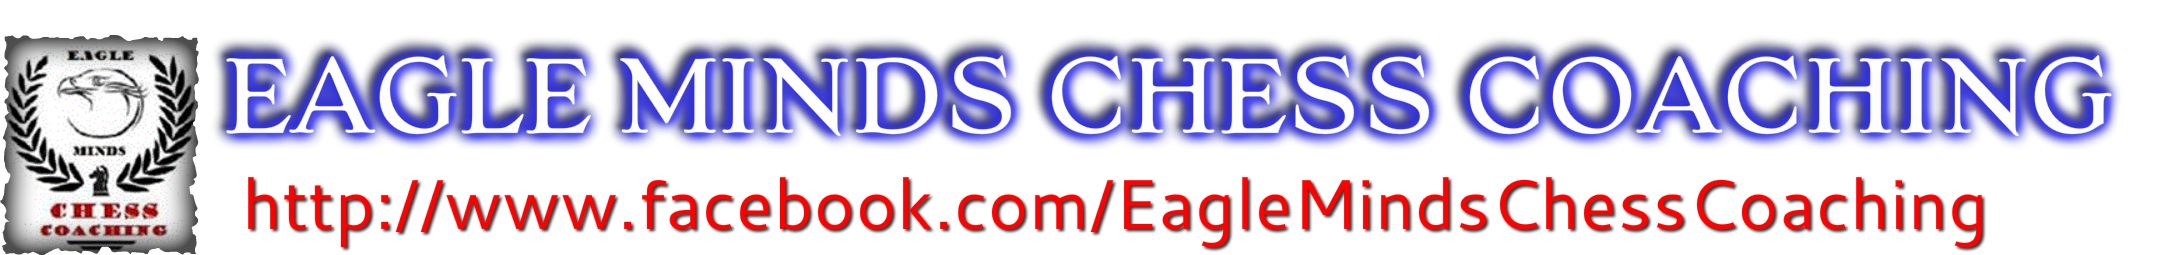 EAGLE MINDS CHESS COACHING<br />&#8203;https://www.facebook.com/EagleMindsChessCoaching